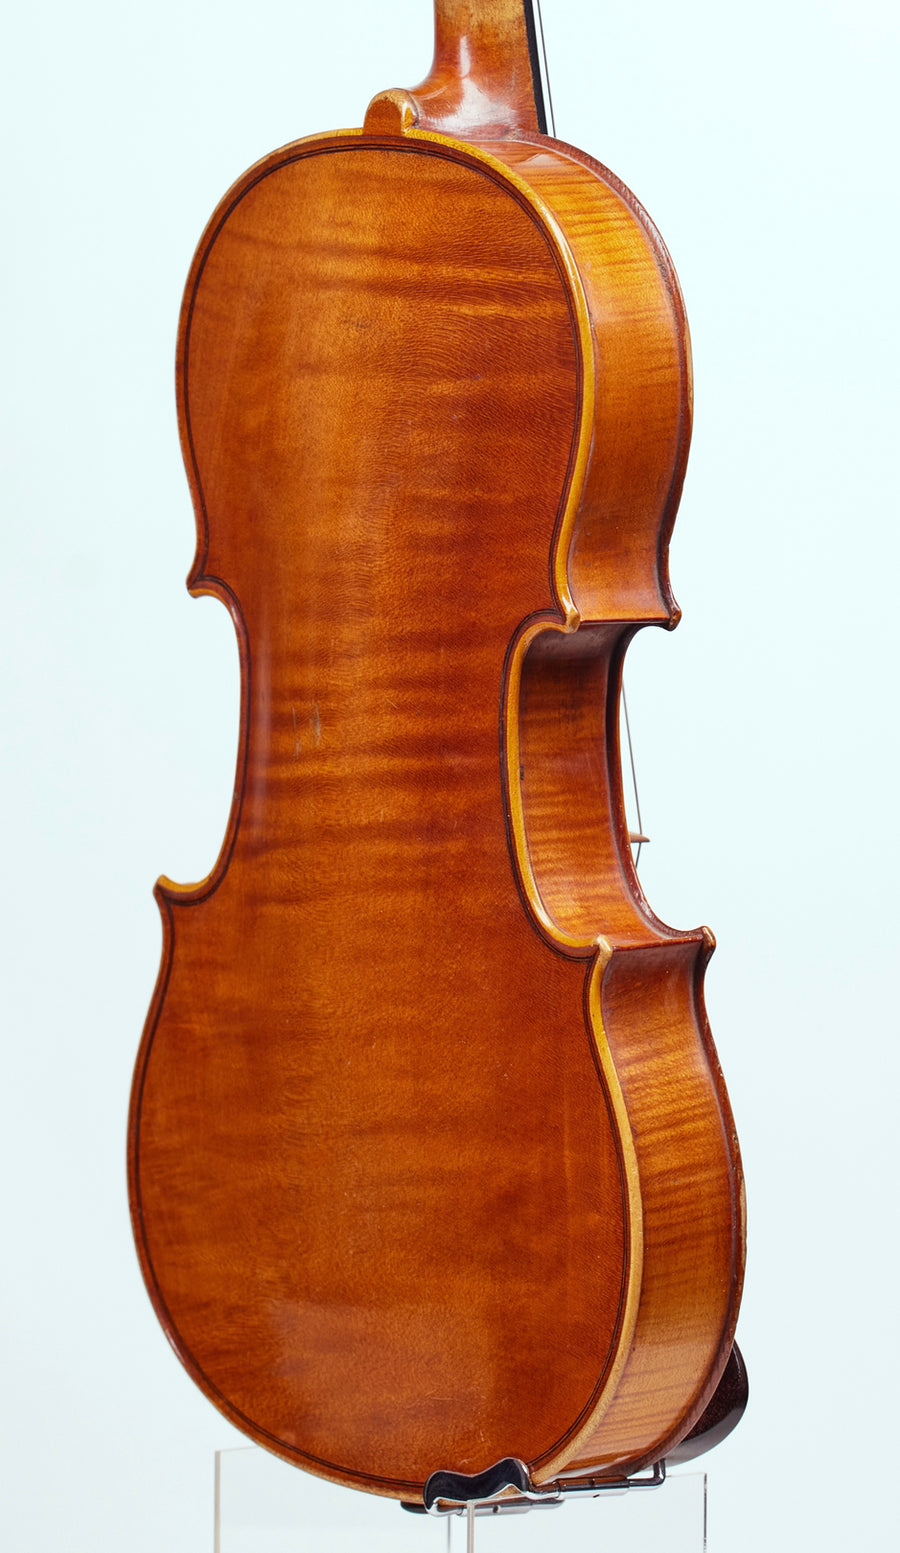 A French Violin, Probably By Francois Salzard, Circa 1830-1835.